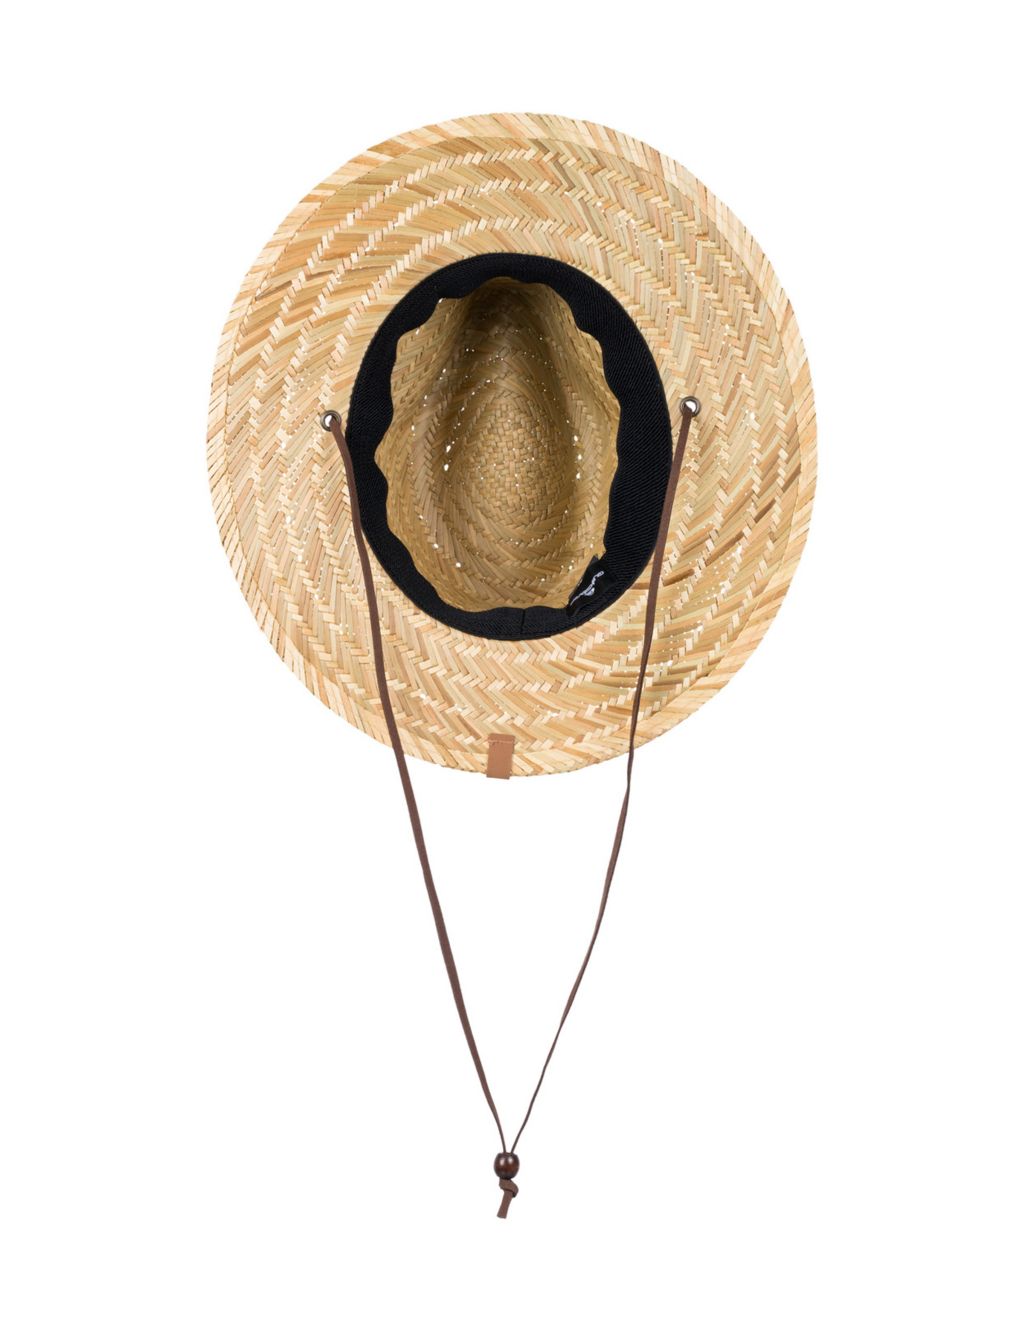 Jettyside 2 Straw Panama Hat 2 of 5